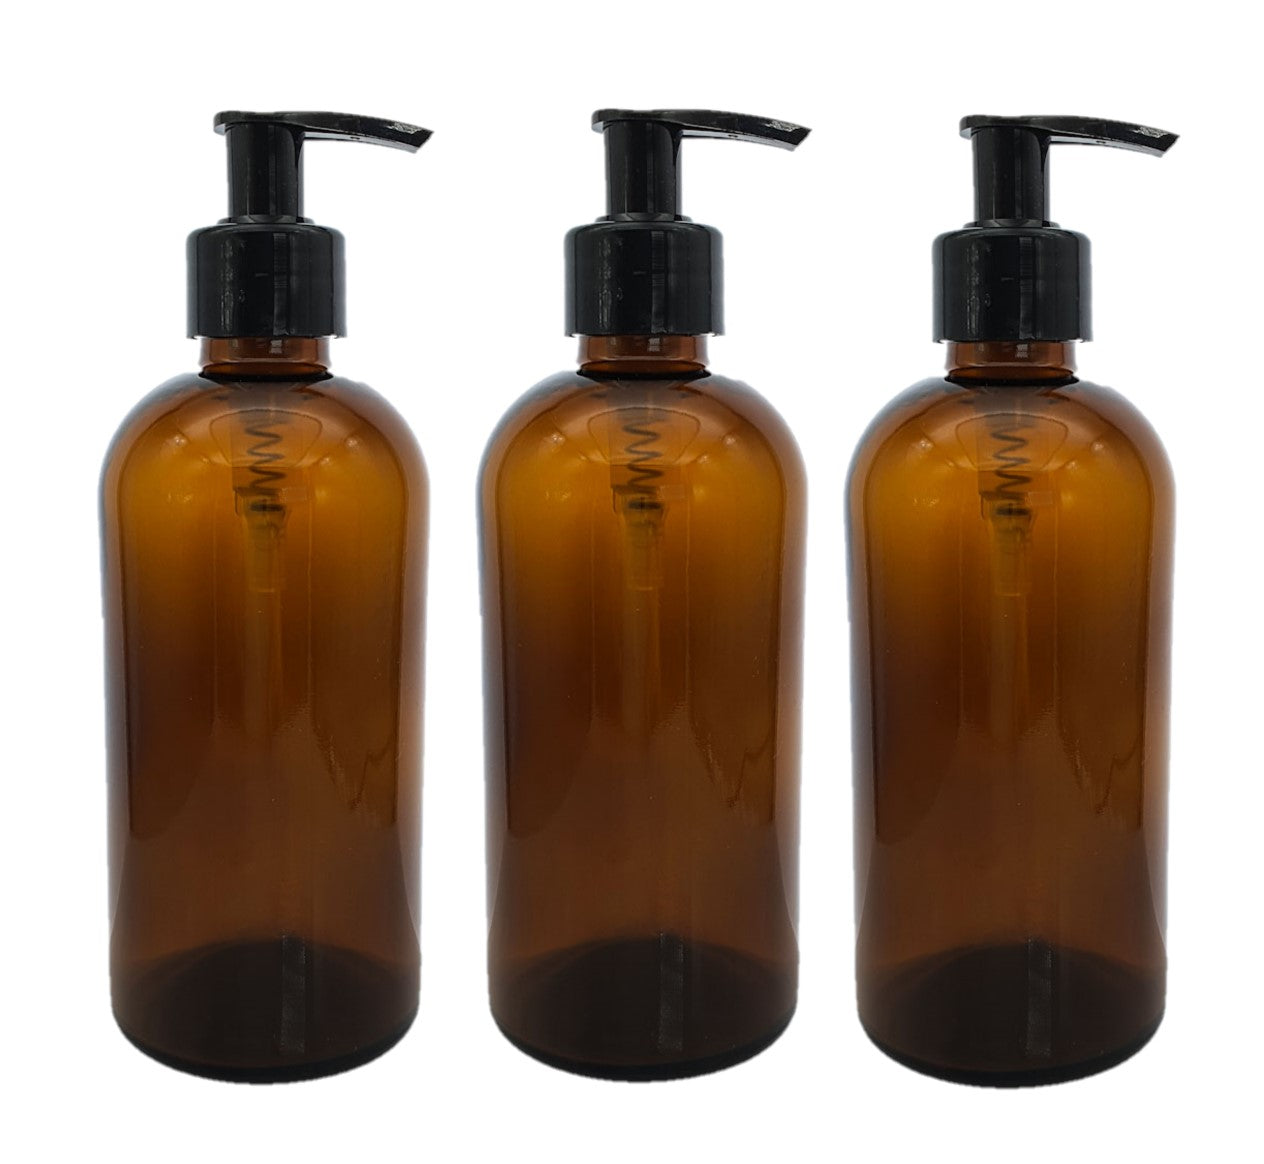 300ml Amber Glass Soap Dispenser Bottles with Black Lock up Pump